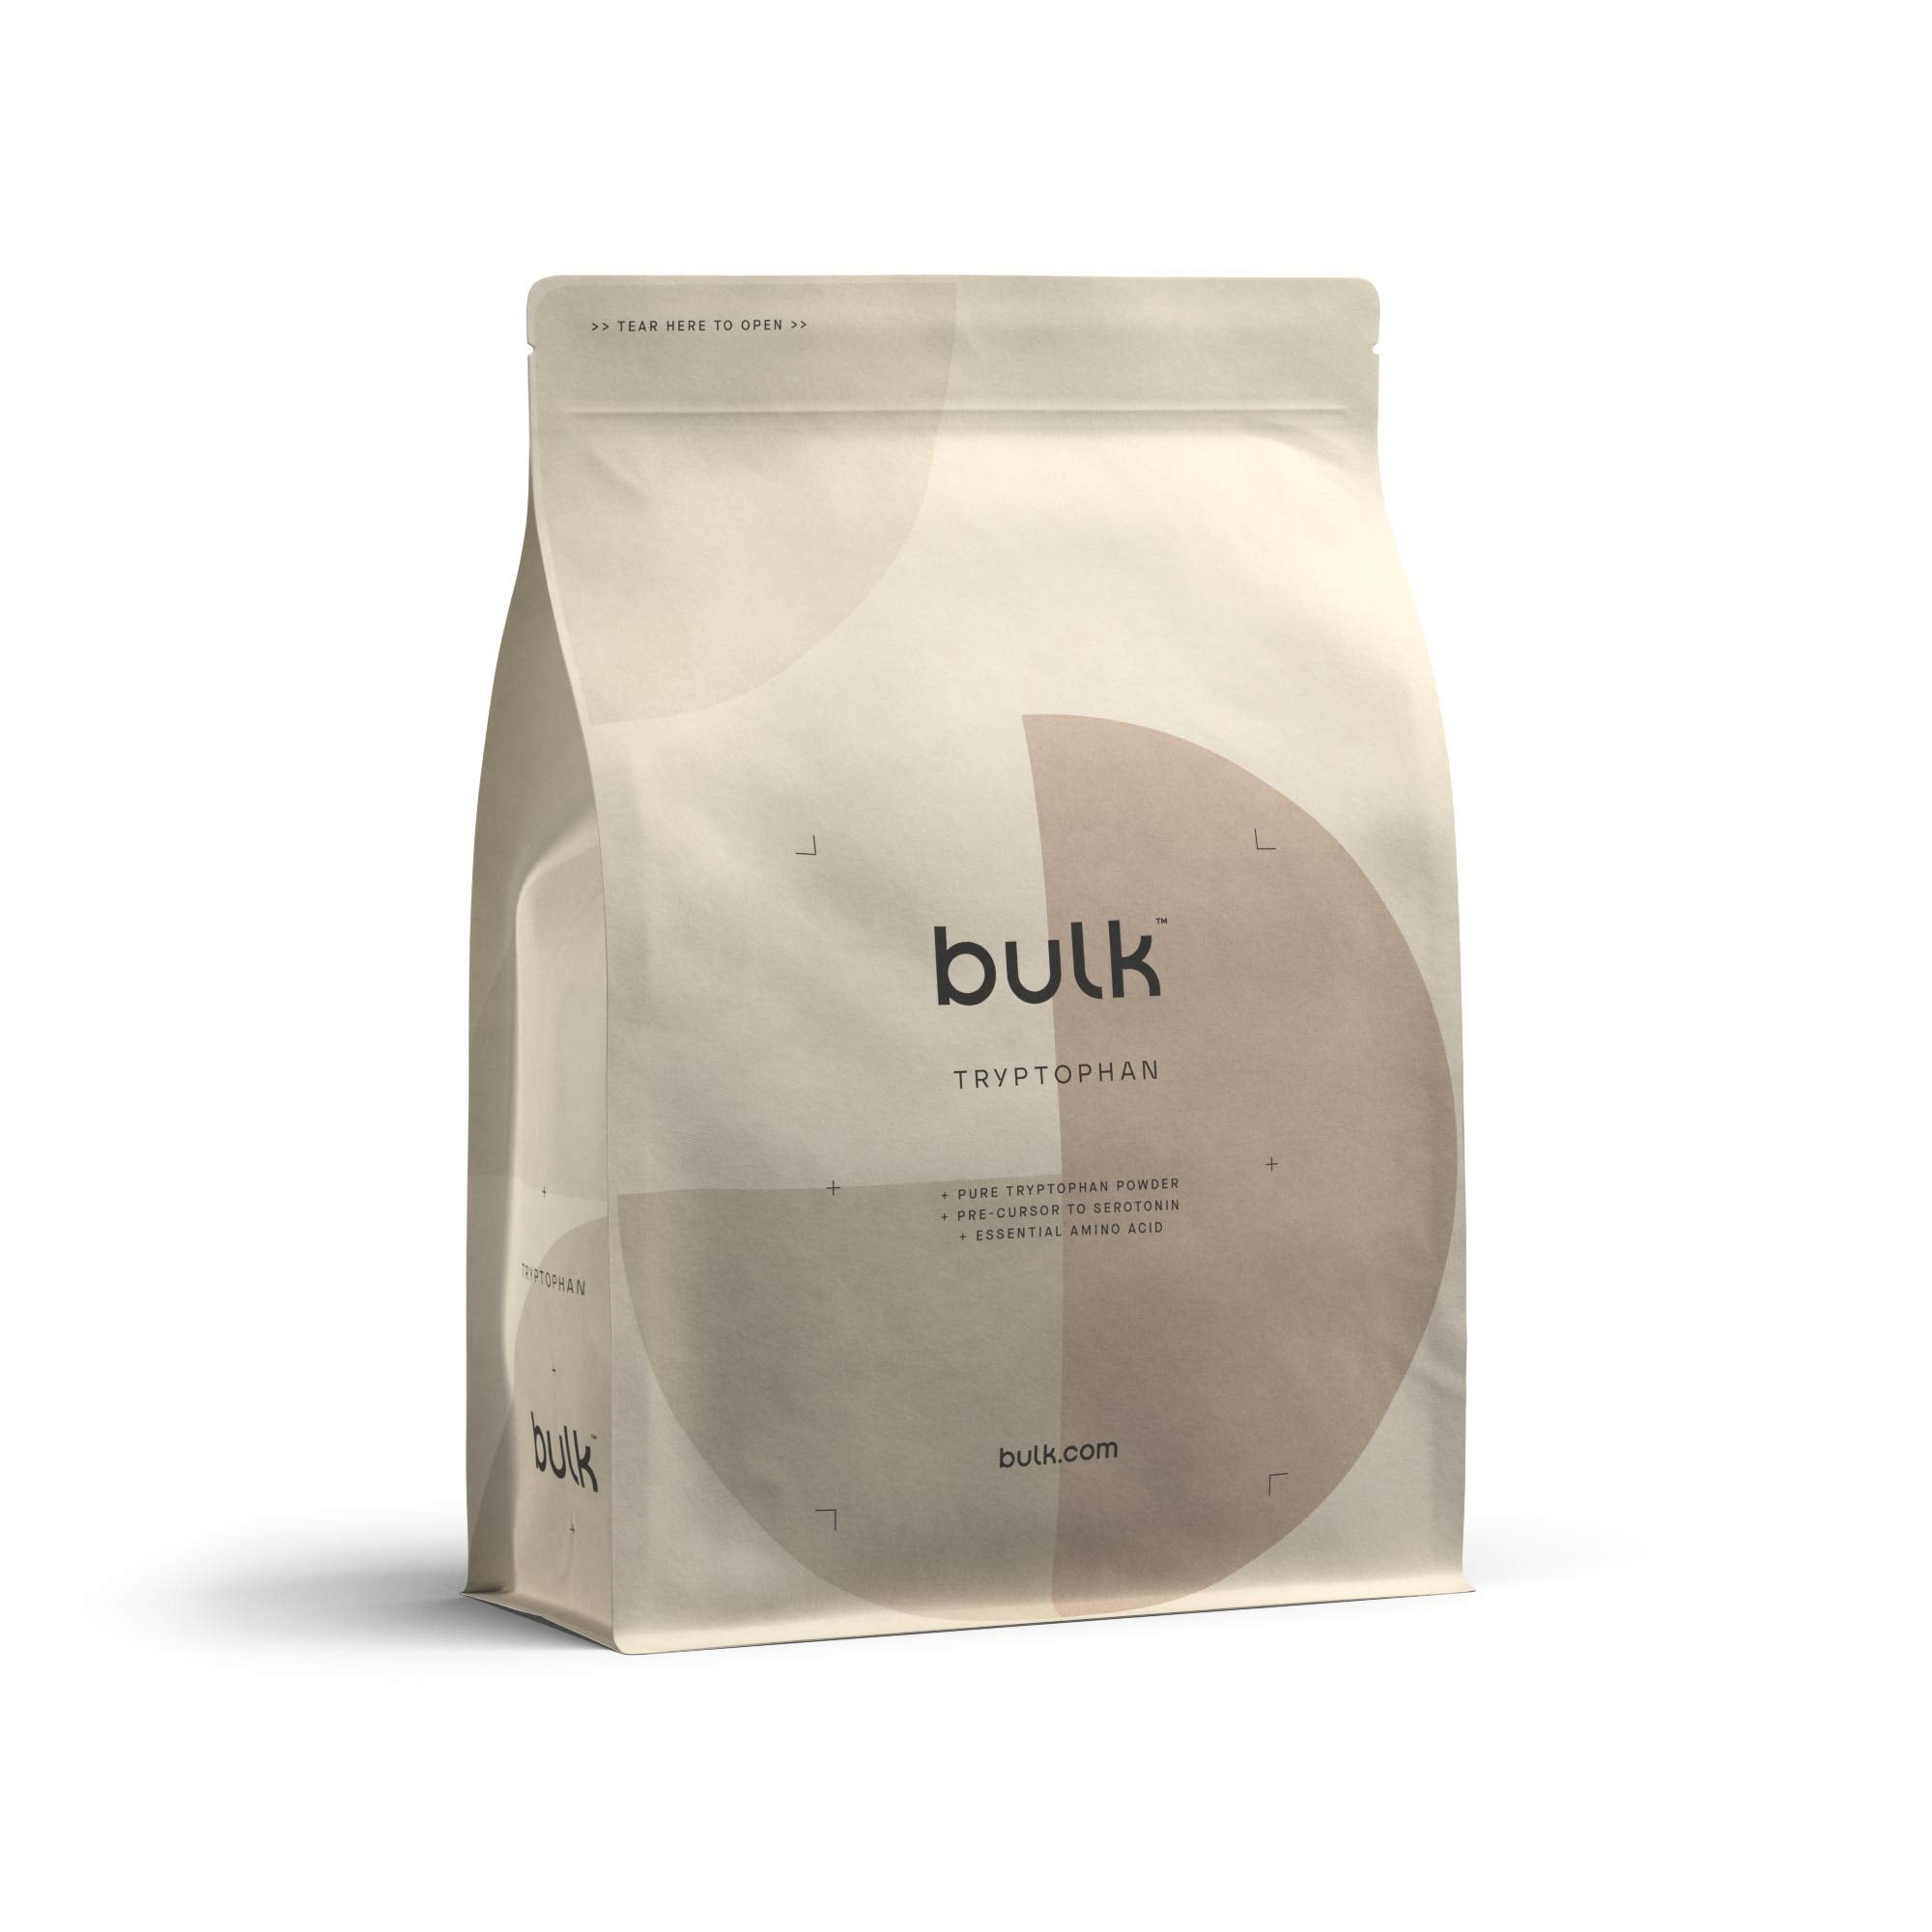 Bulk Pure Tryptophan Powder, 100 g, Packaging May Vary